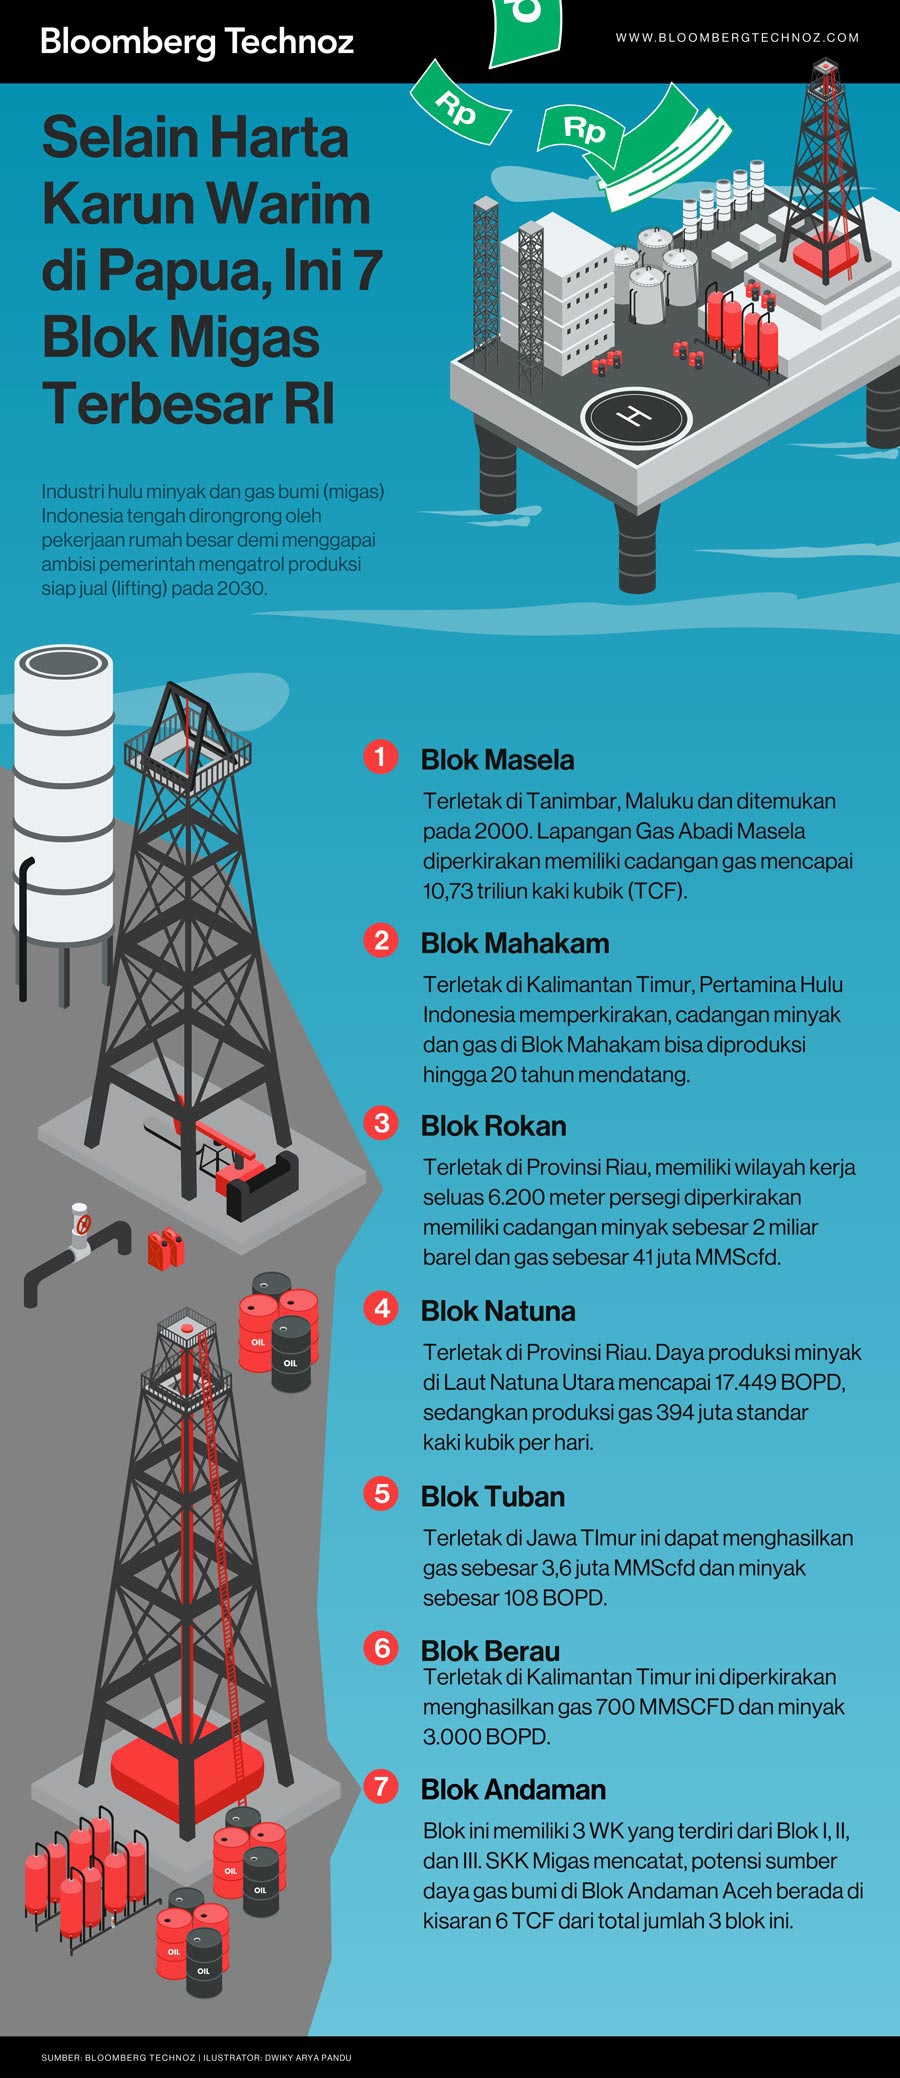 Selain Harta Karun Warim di Papua, Ini 7 Blok Migas Terbesar RI (Infografis/Bloomberg Technoz)